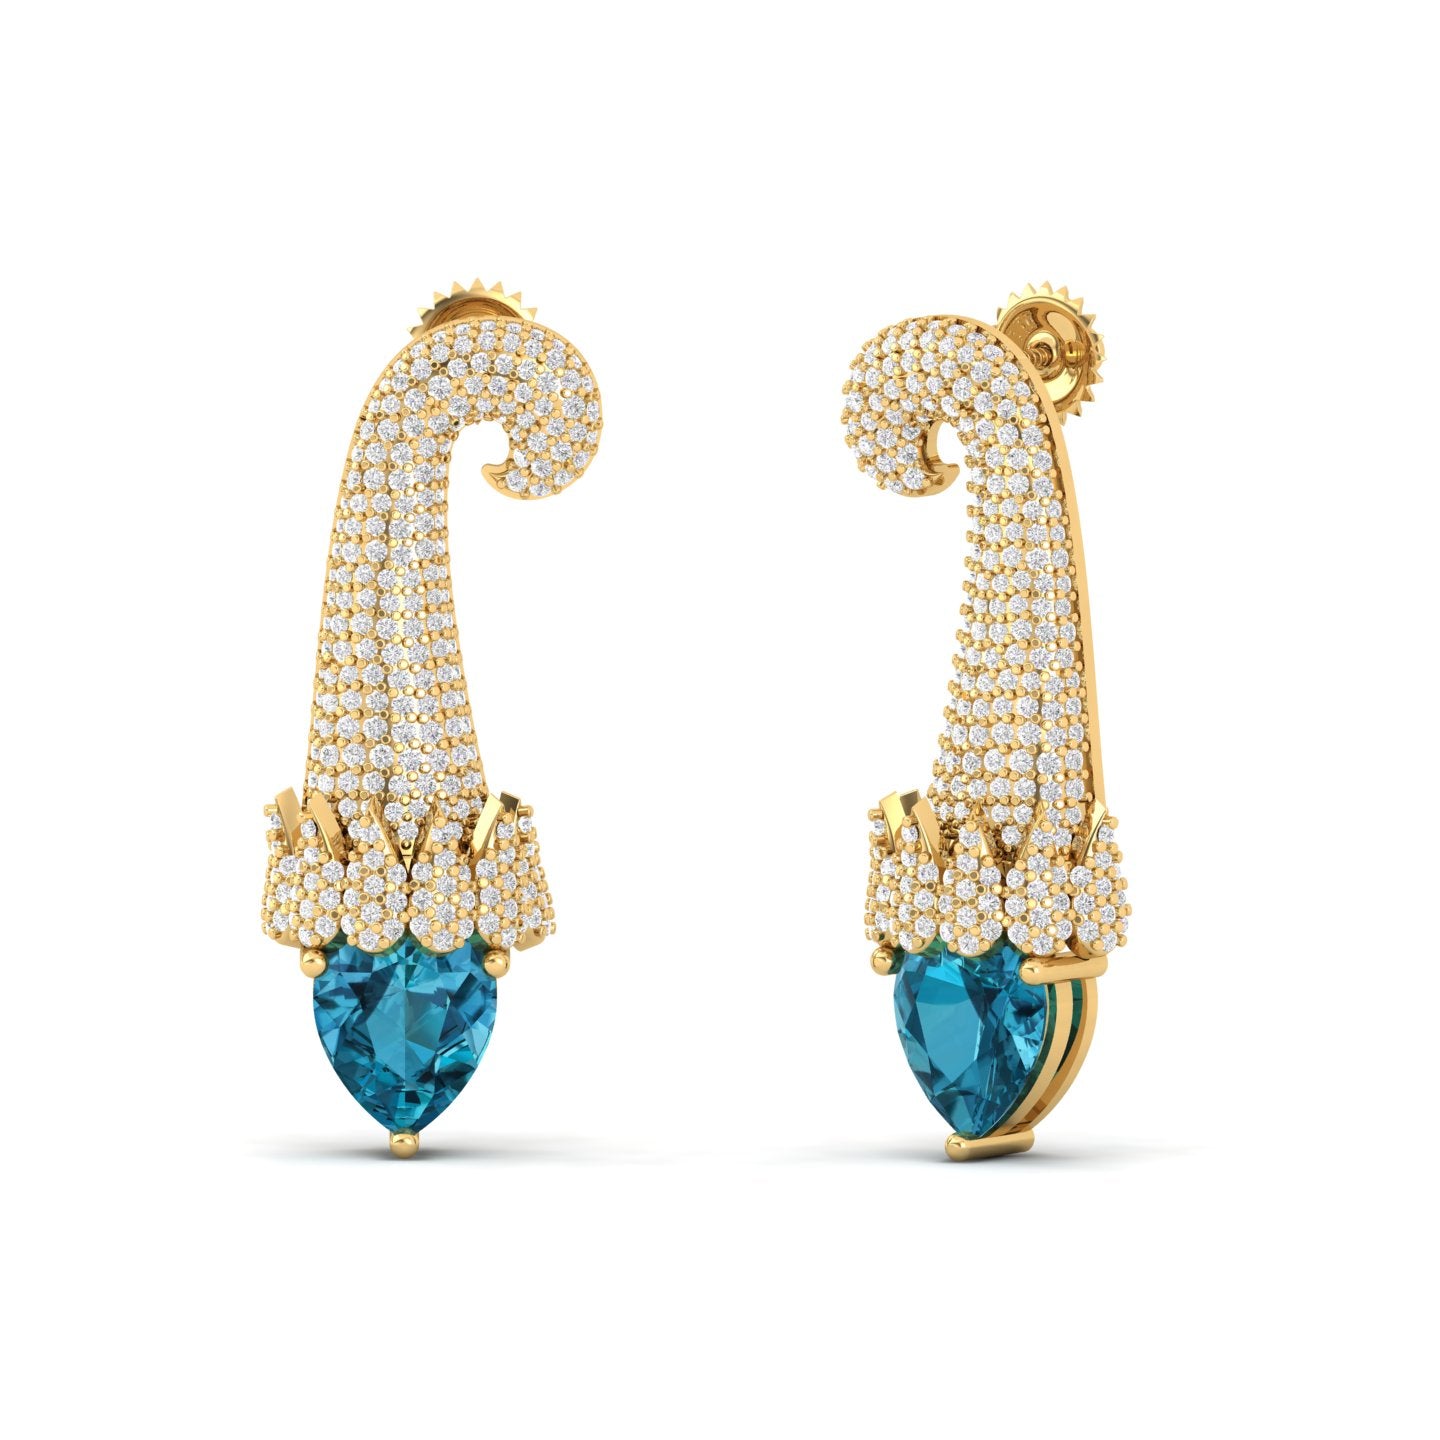 Maurya Kalangi Topaz Drop Earrings with Diamonds